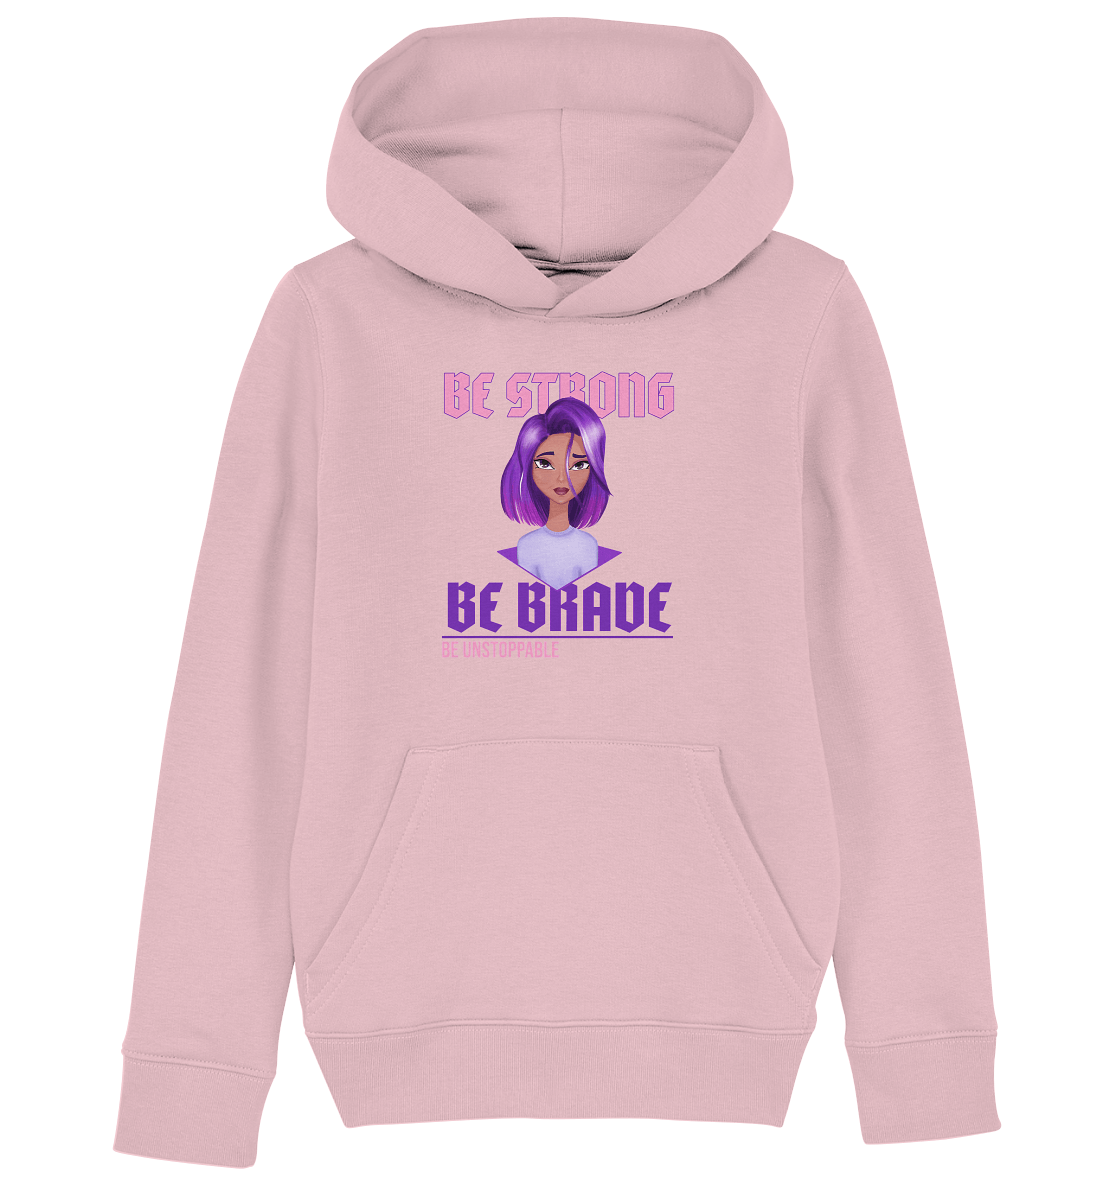 Coole Bilder, lustige Sprüche superhero lila cartoon girls auf hoodies in rosa lila Superhero Girl Cartoon